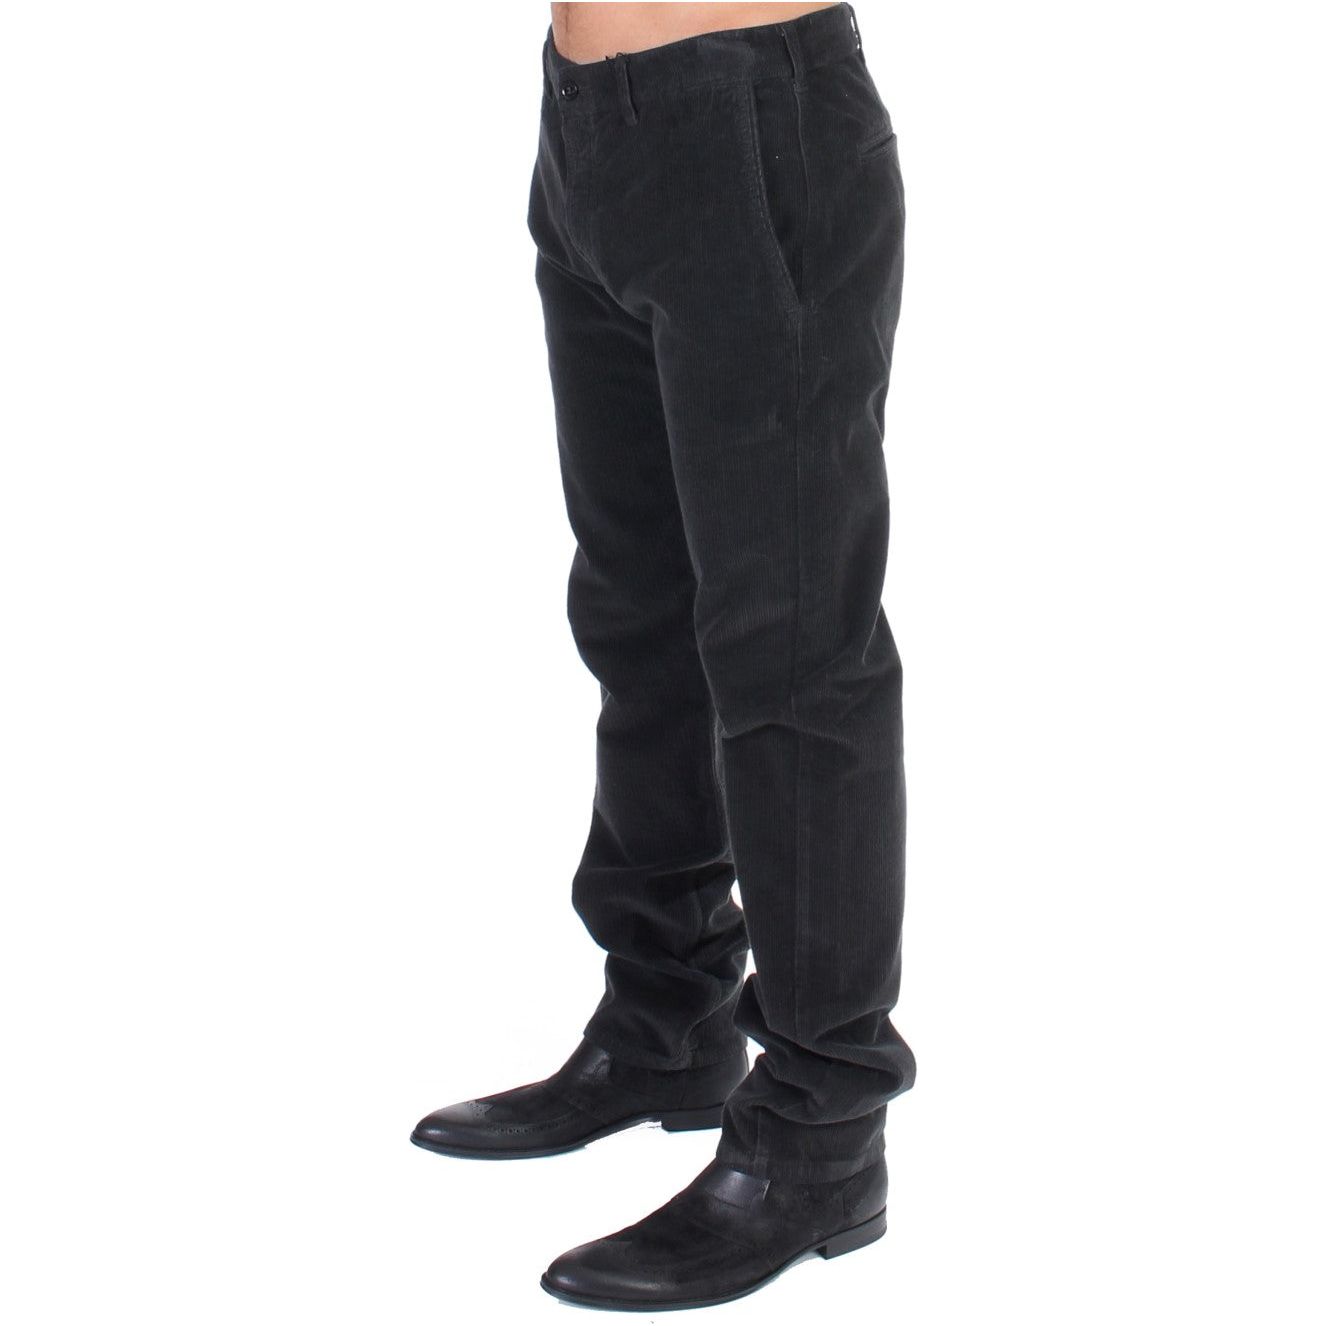 GF Ferre Elegant Black Cotton Corduroy Pants Jeans & Pants black-corduroy-cotton-straight-fit-pants 53278-black-corduroy-cotton-straight-fit-pants-1.jpg